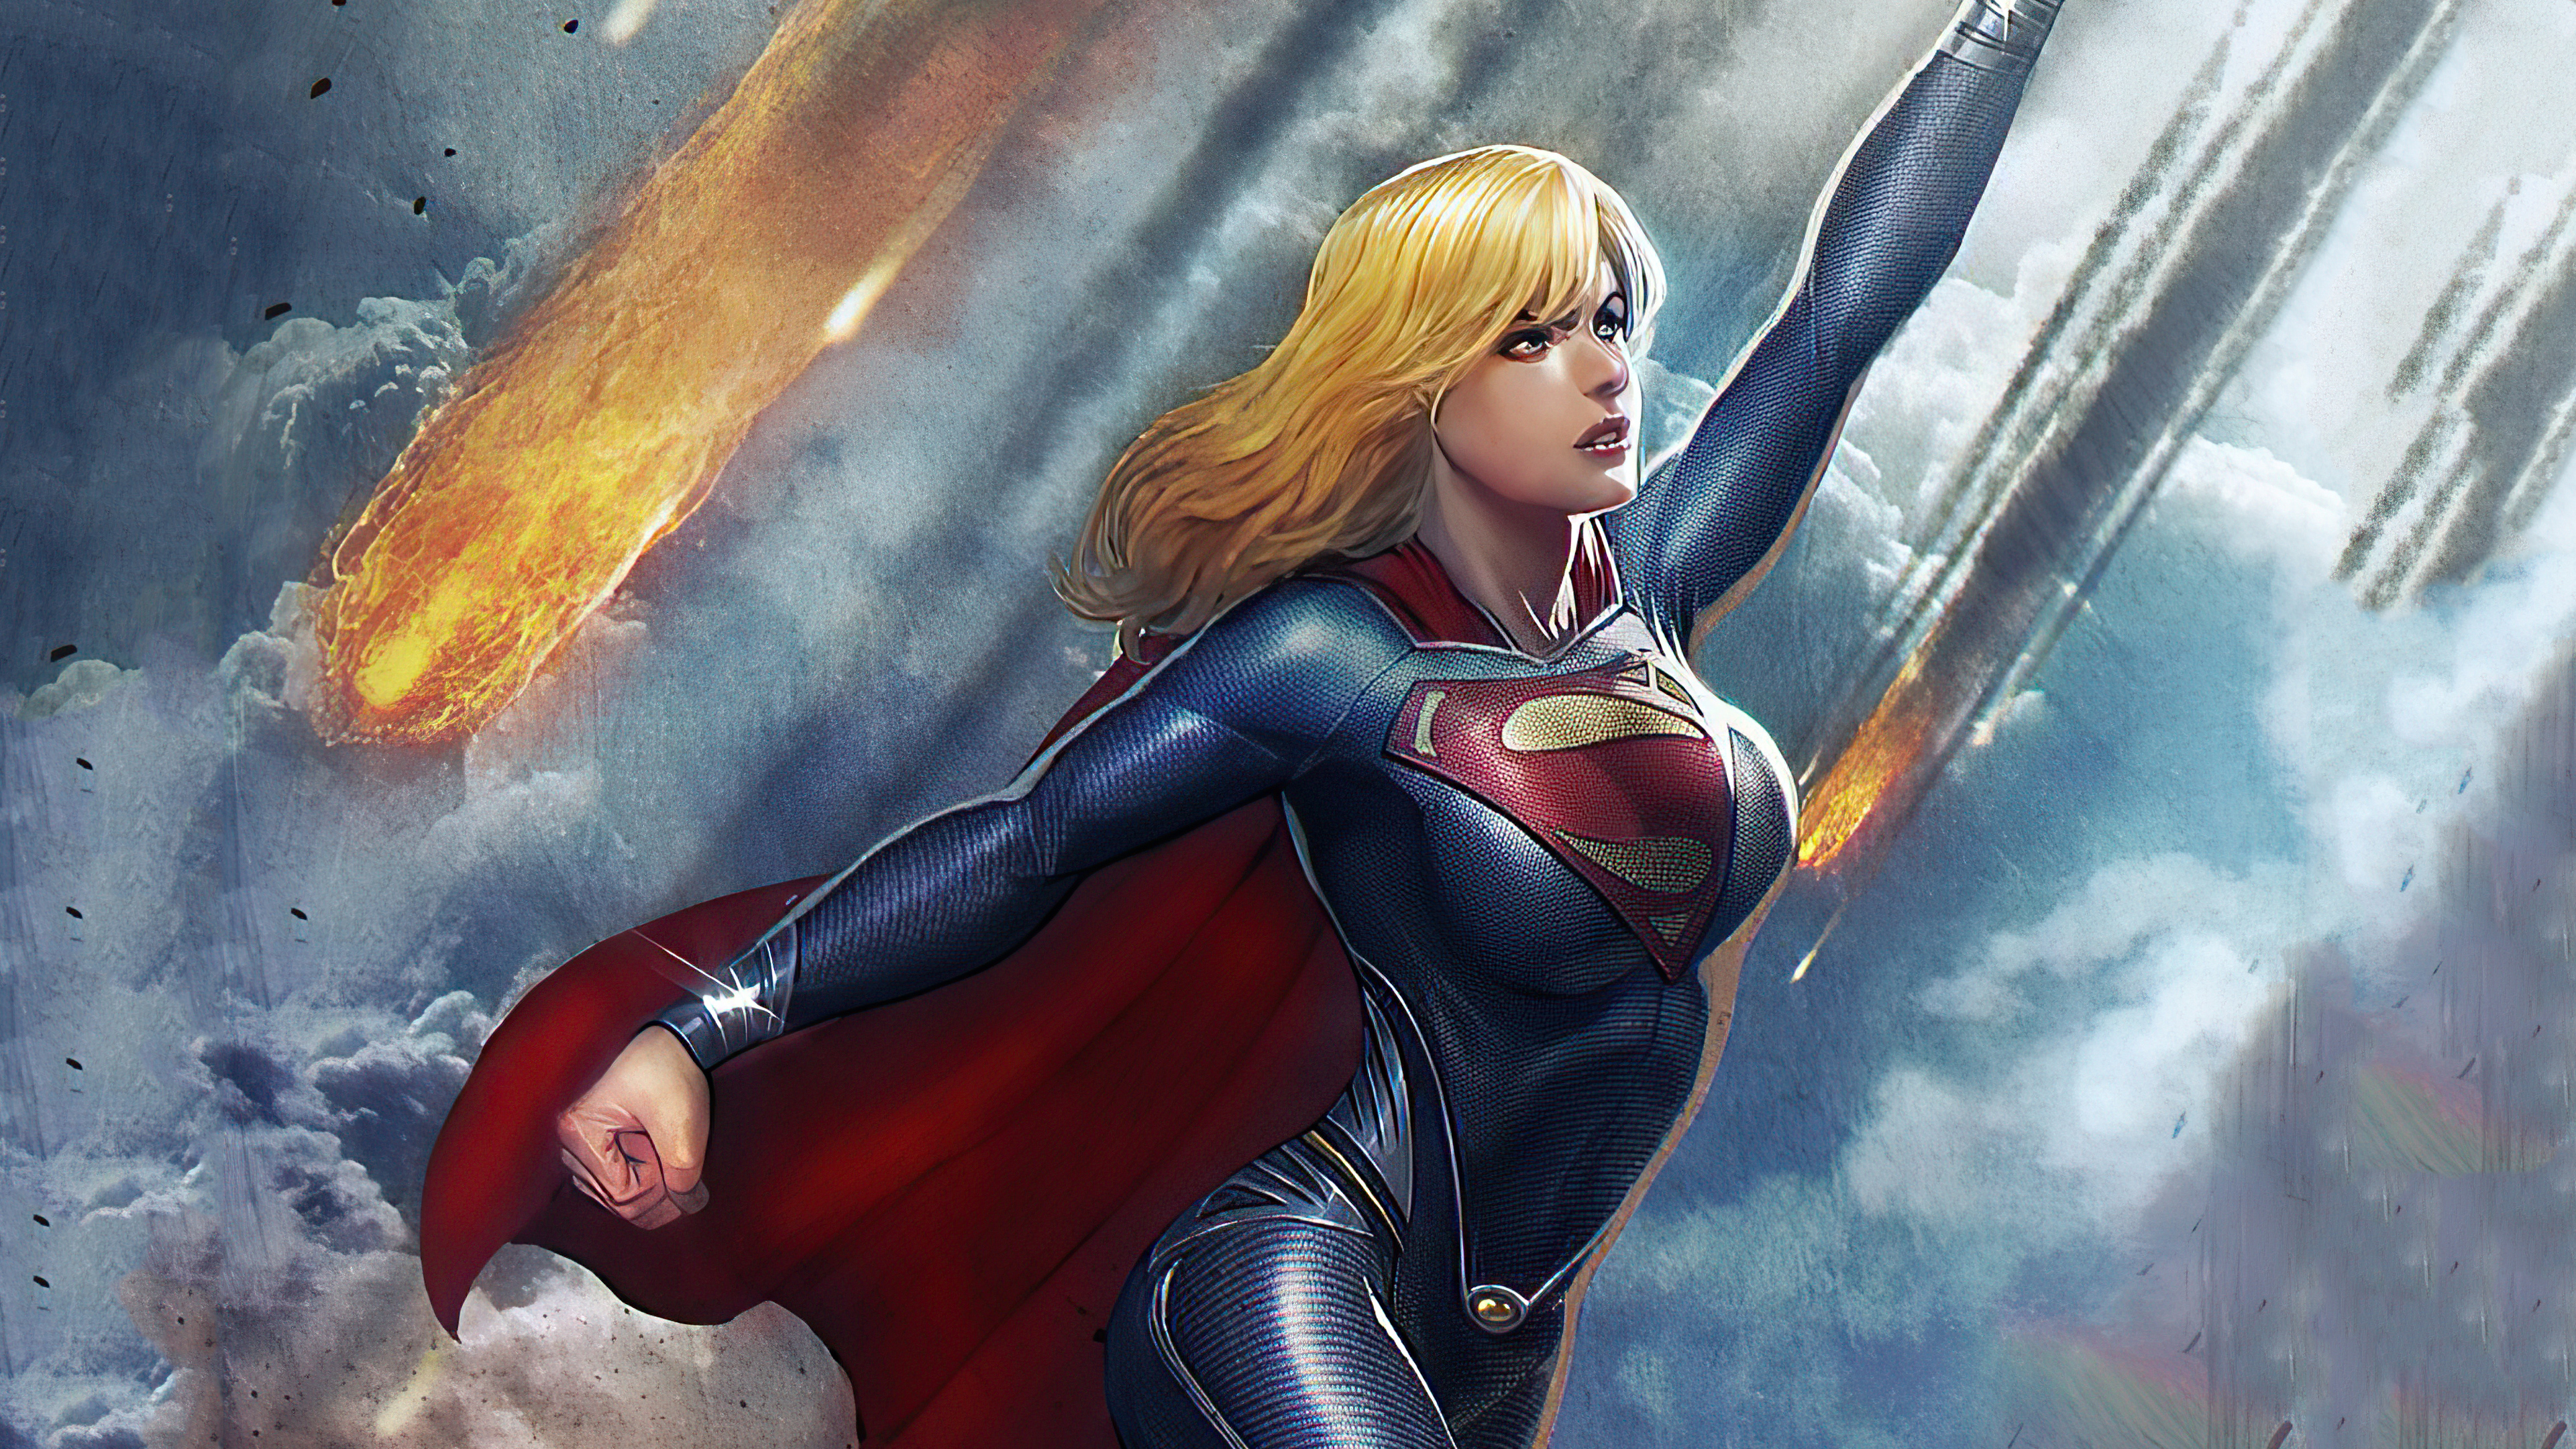 Supergirl 4k Ultra HD Wallpaper Background Image 3840x2160.